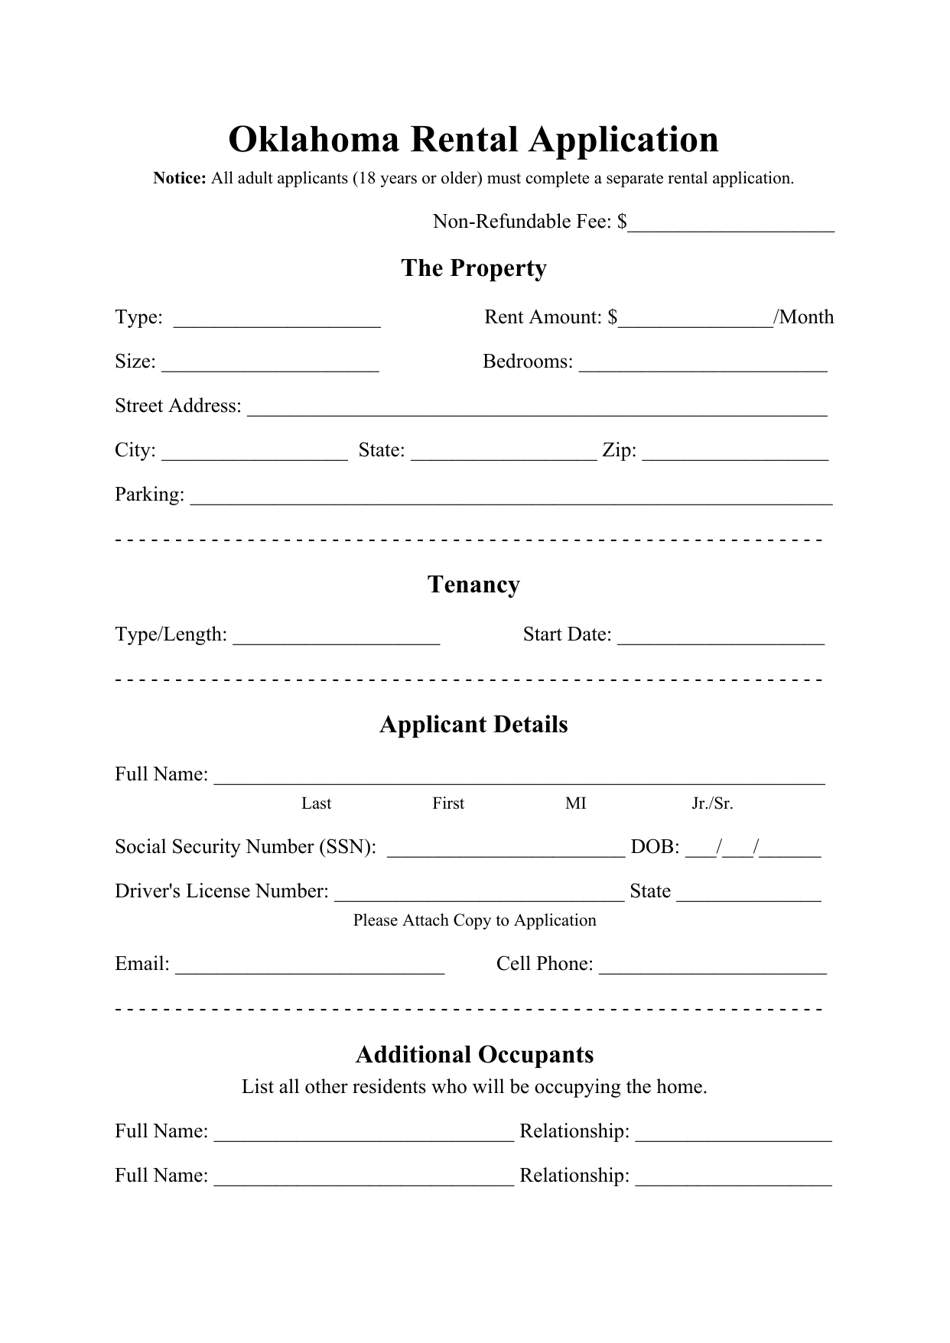 oklahoma rental application form download printable pdf templateroller